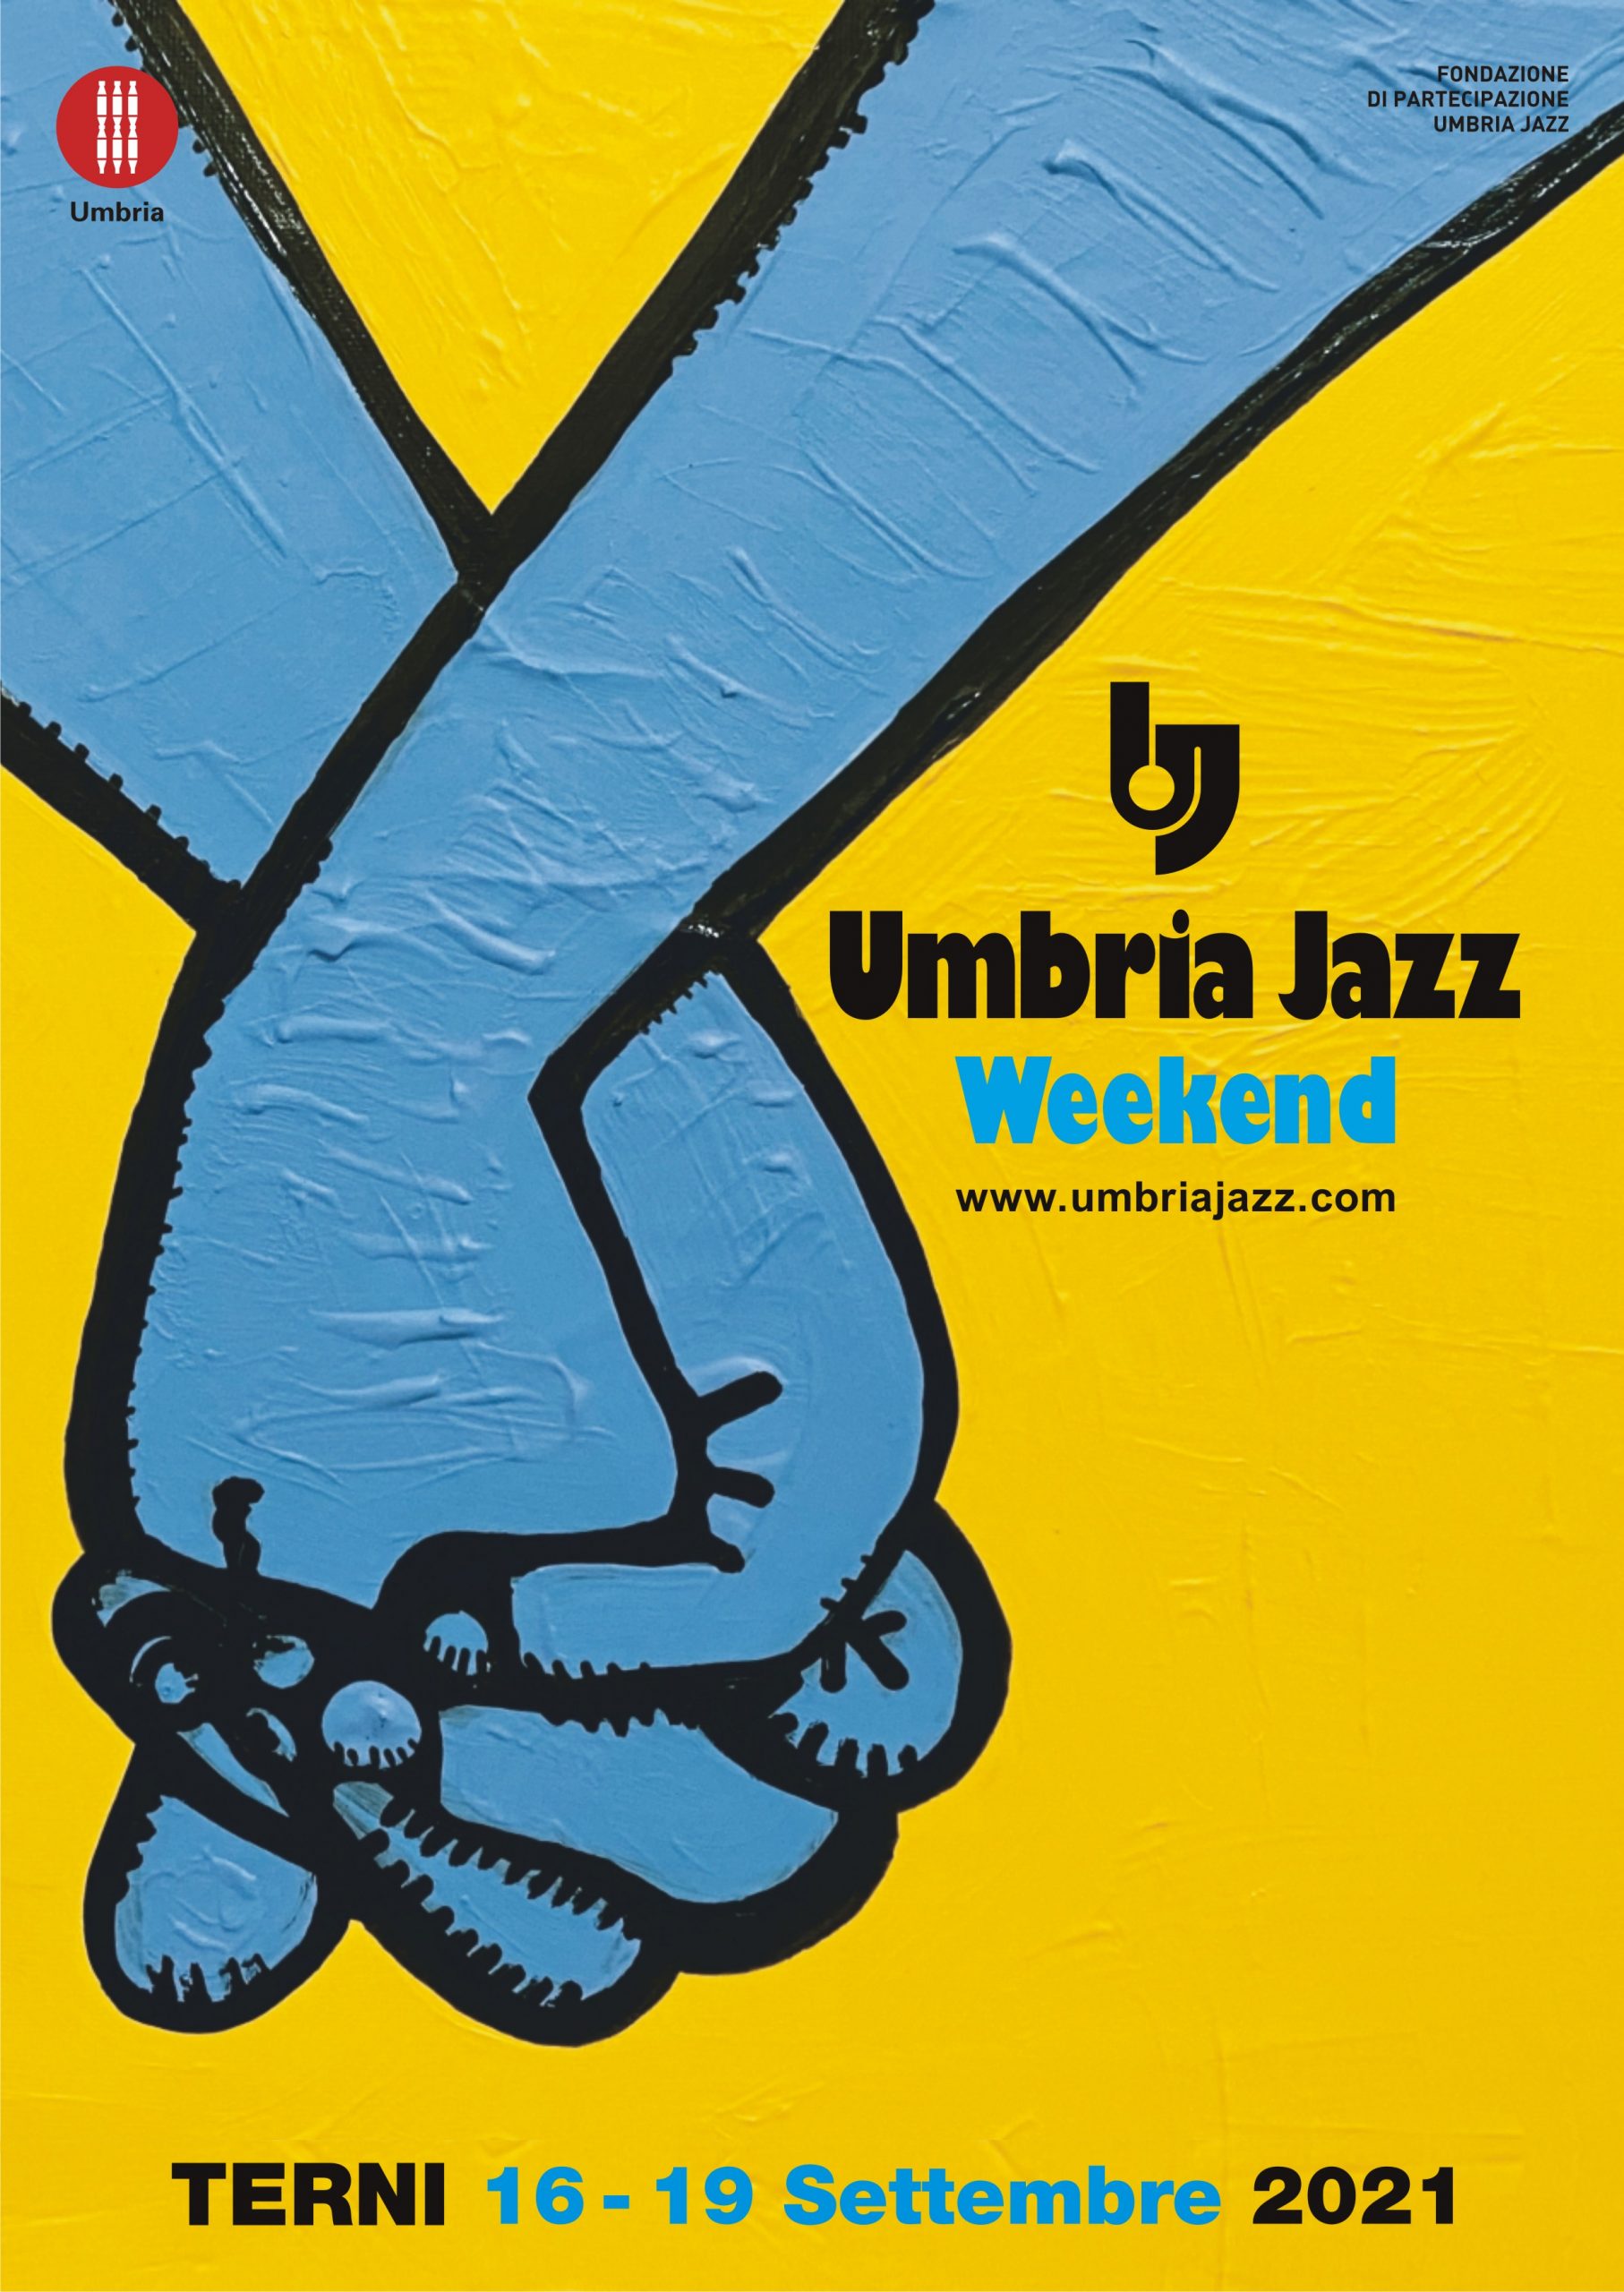 Umbria Jazz weekend